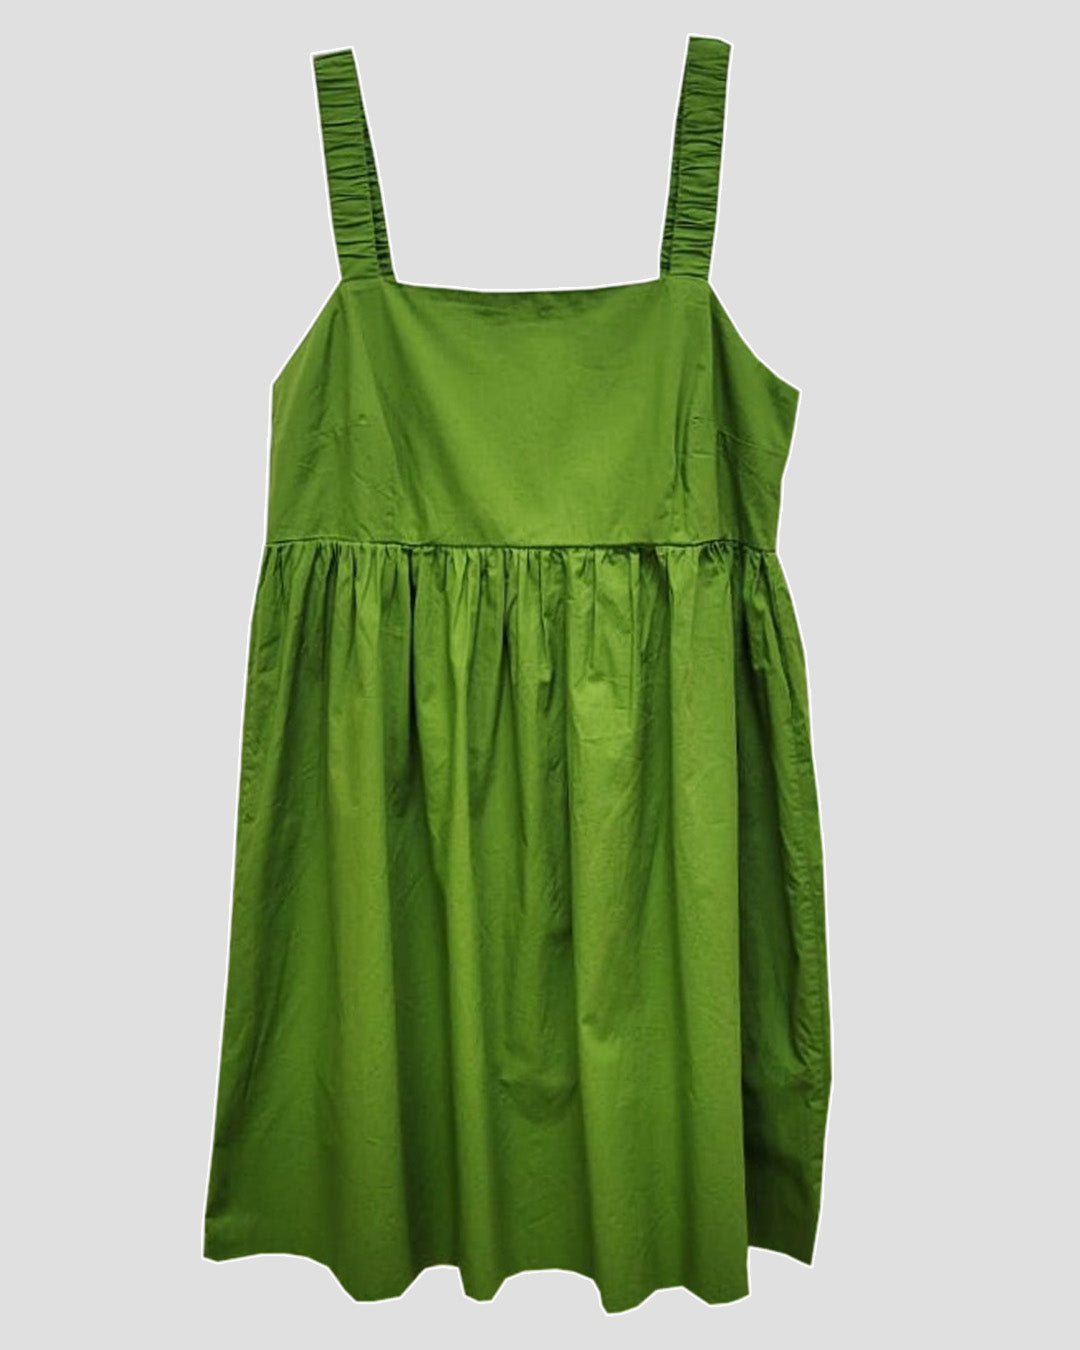 Jade dress